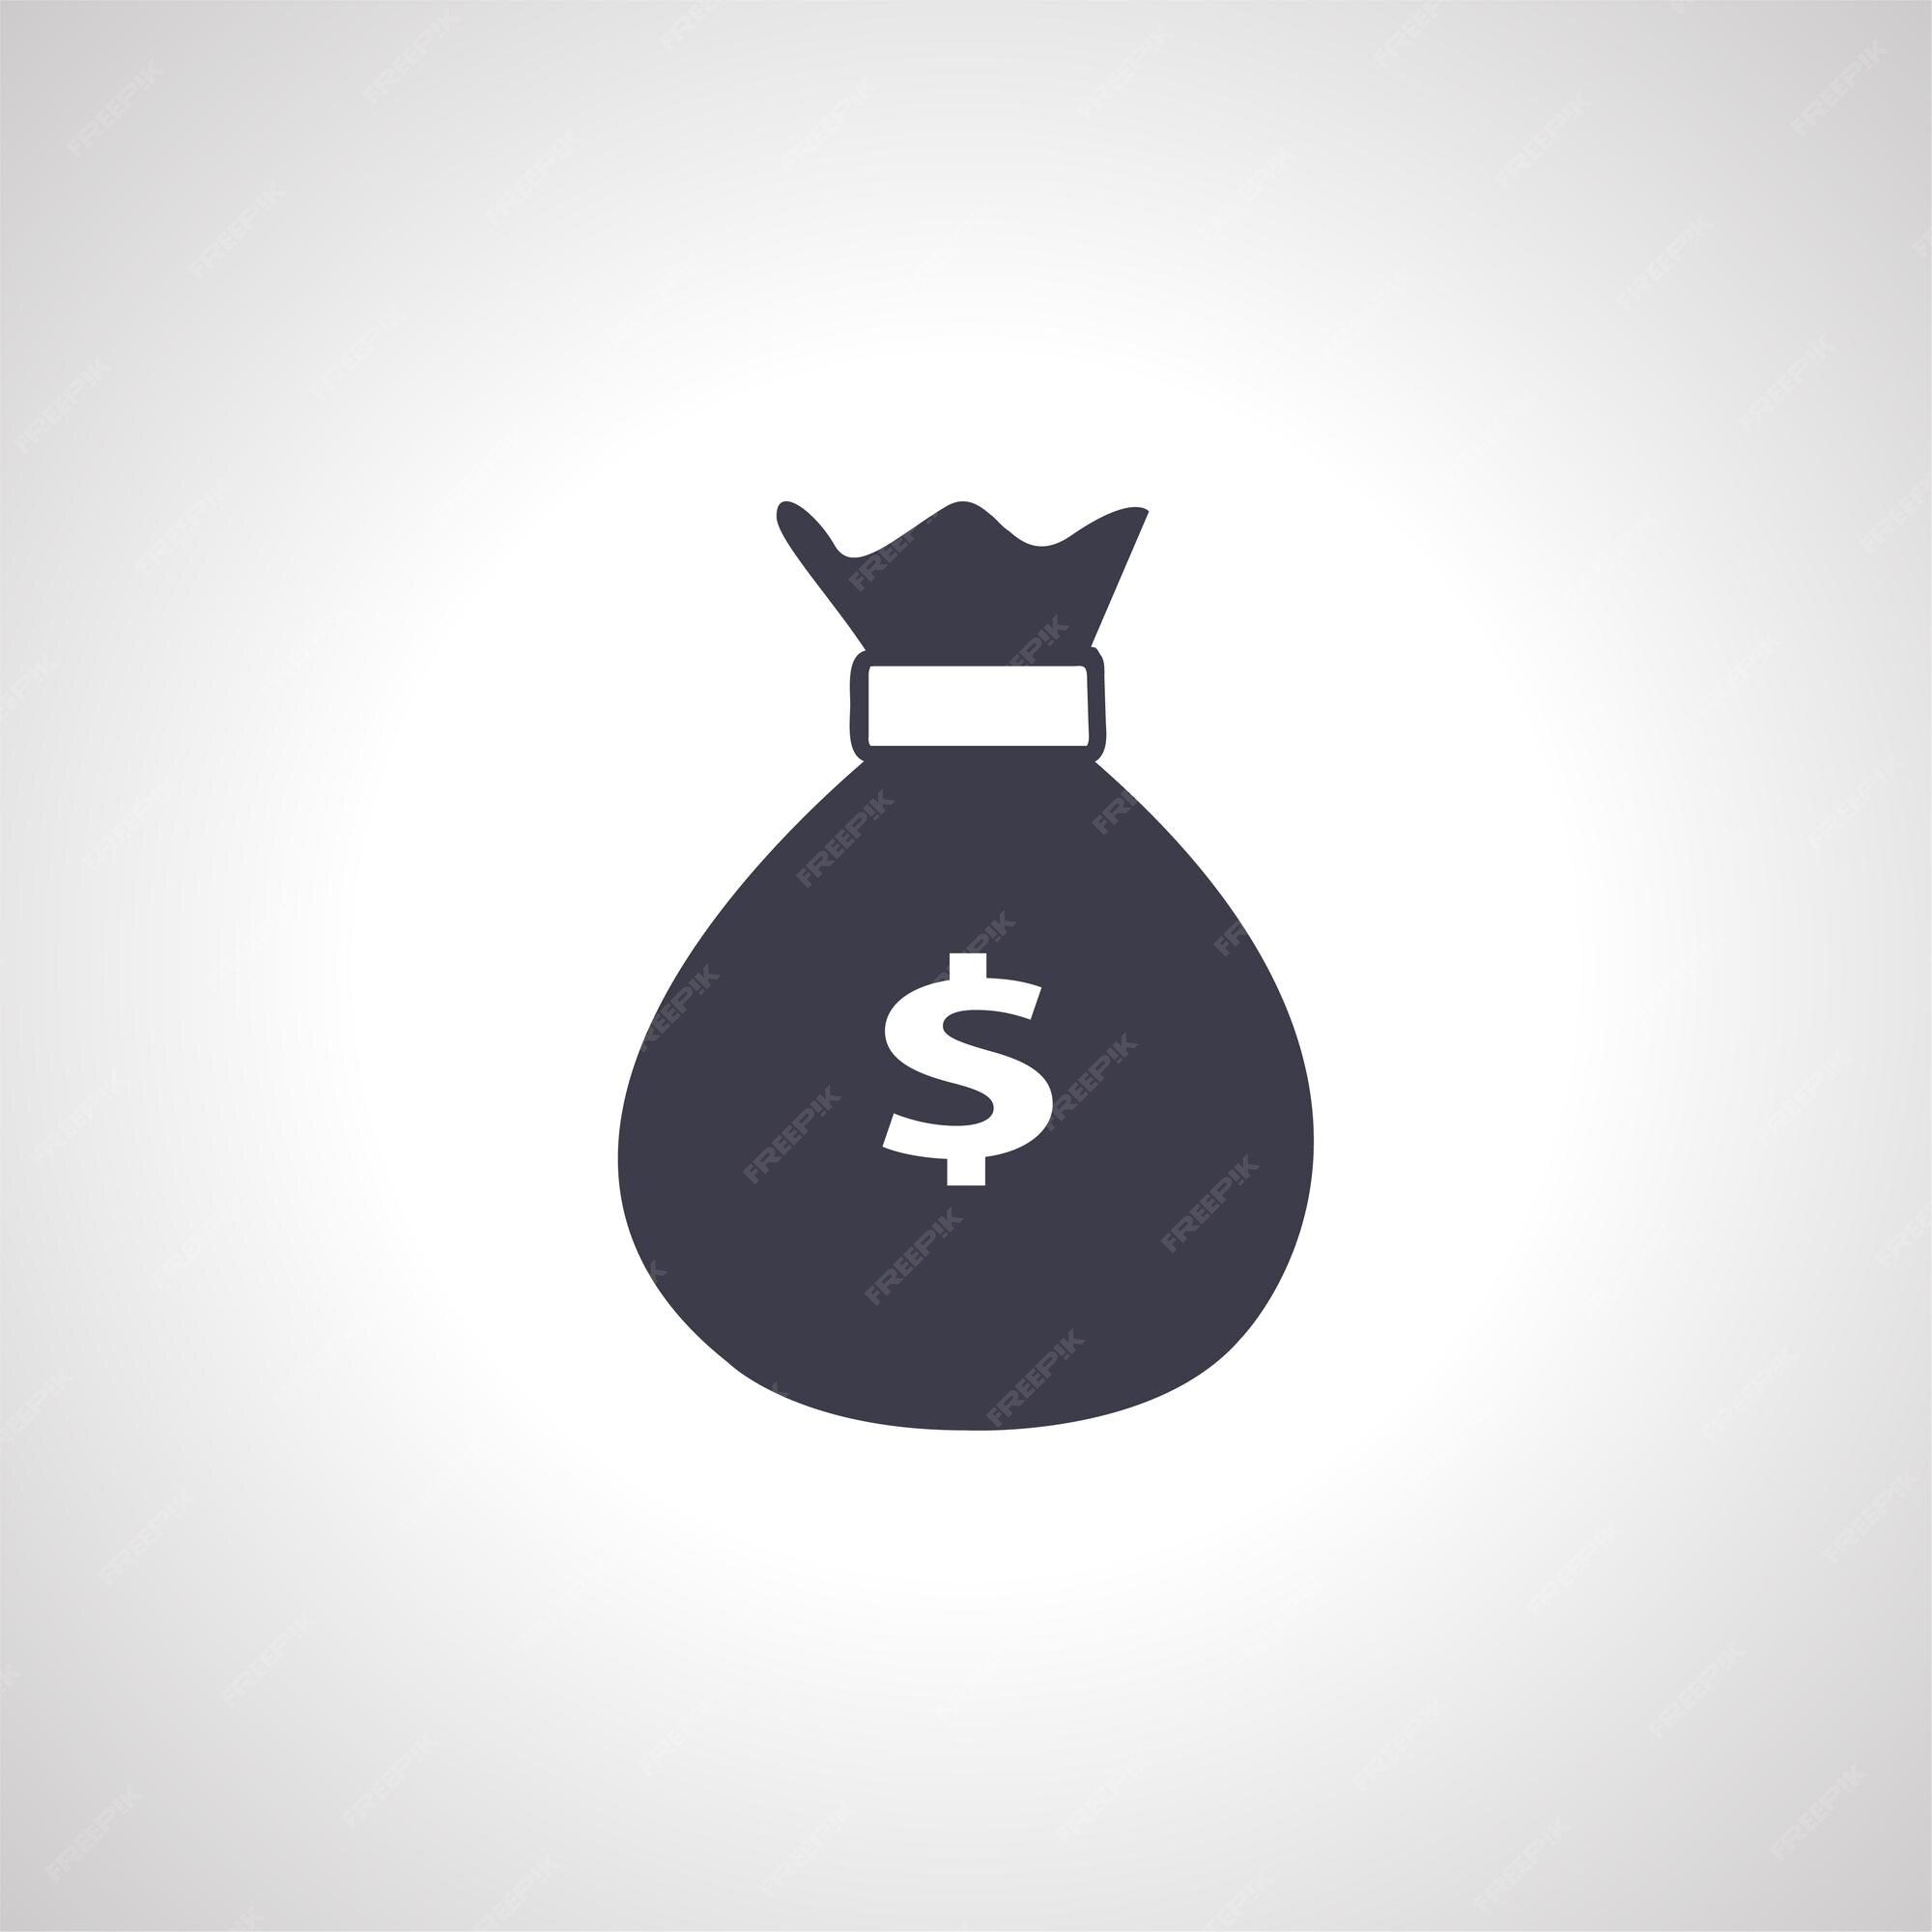 Premium Vector | Money bag icon money pouch icon